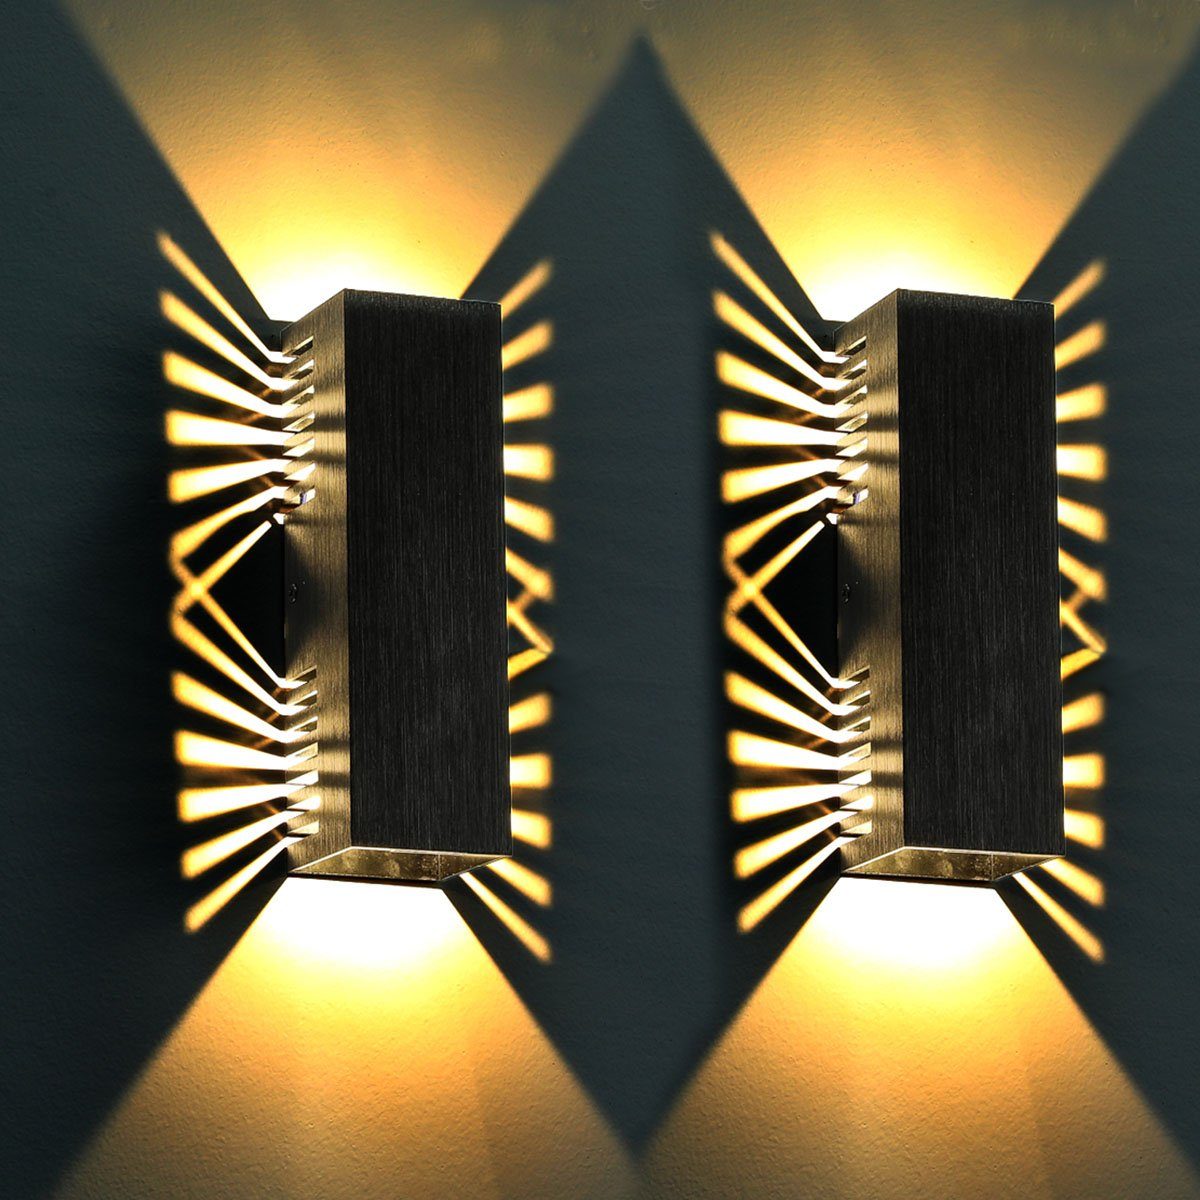 Wohnzimmerbeleuchtung Schwarz, Up Down oyajia Stück 2 aus mit & Licht, fest LED integriert, indirekte Beleuchtung Schatteneffekt, Wandlampe Warmweiß, Wandleuchte 6W Wandleuchte LED Aluminium,